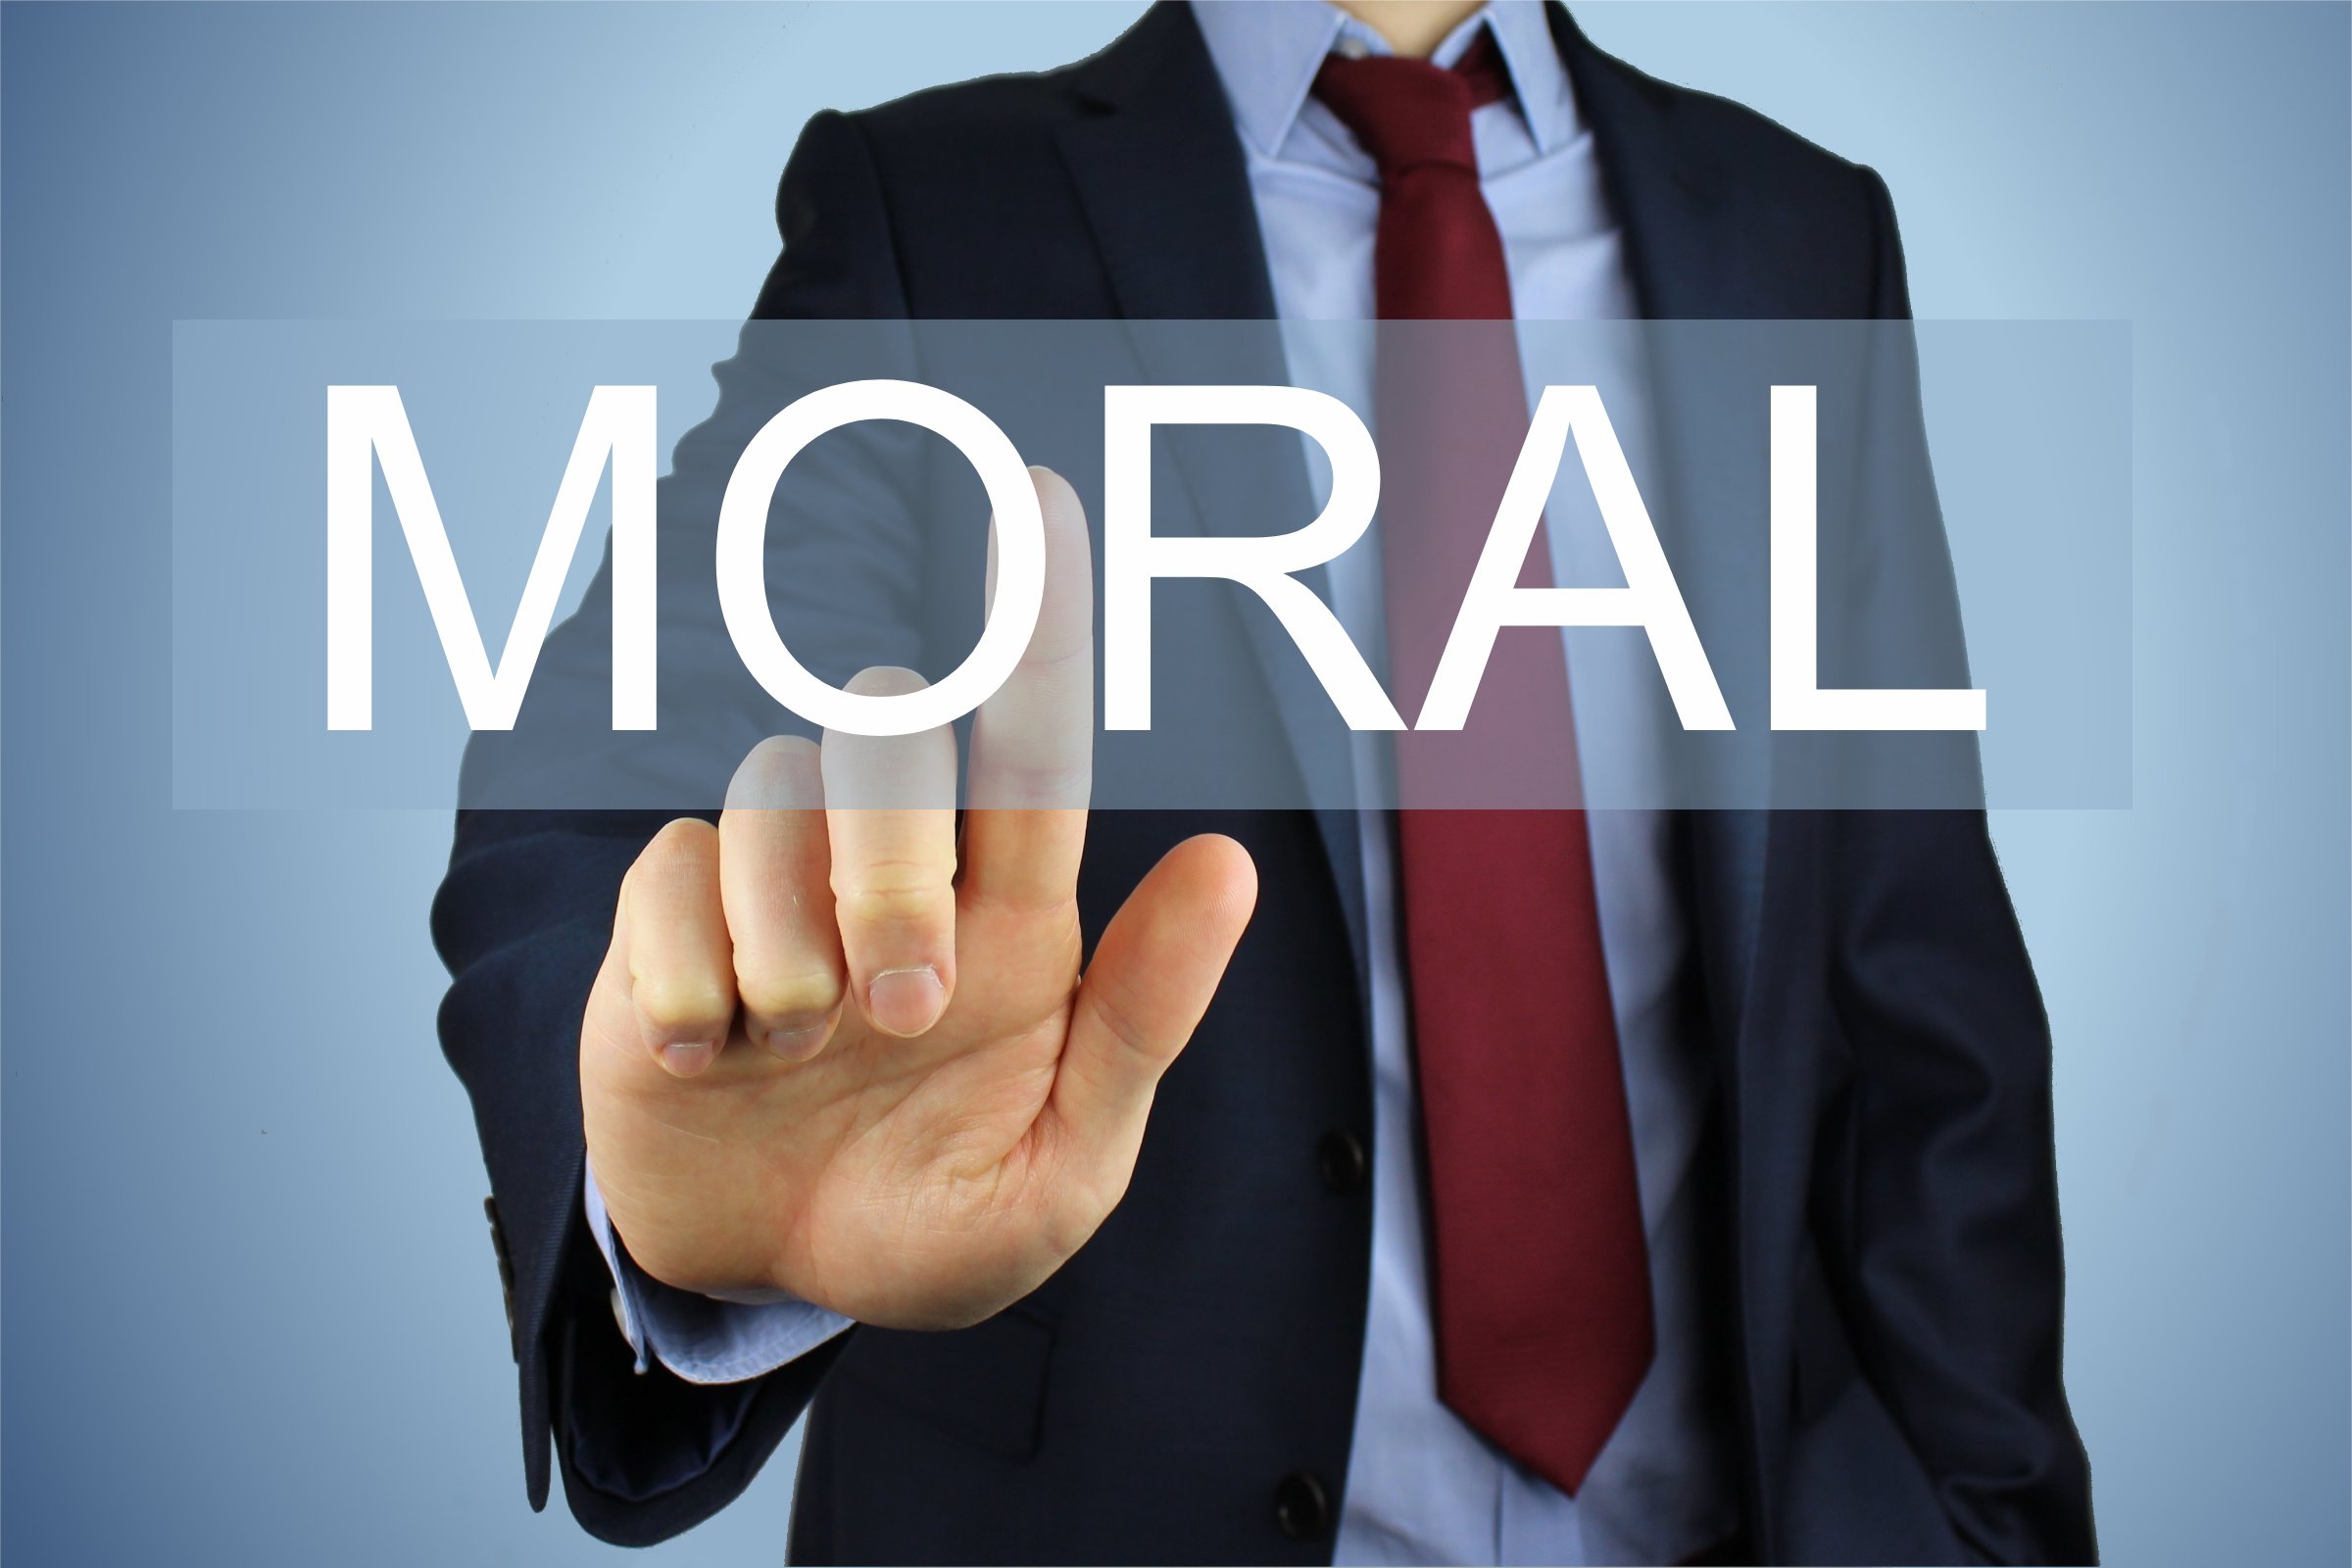 O que significa moral?